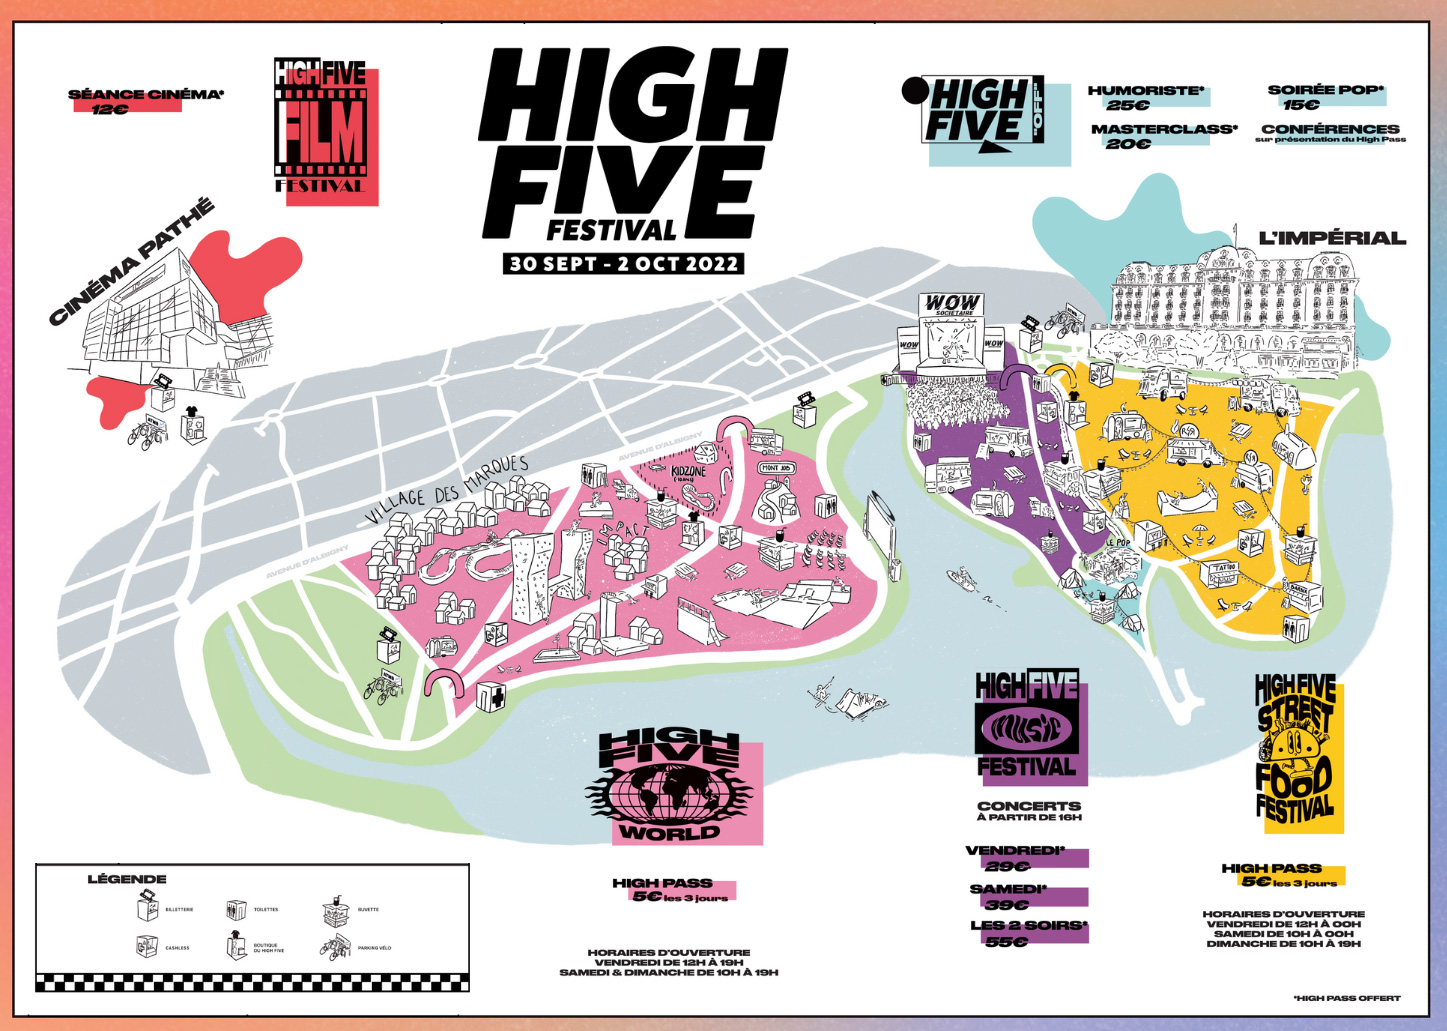 High Five Festival 2022